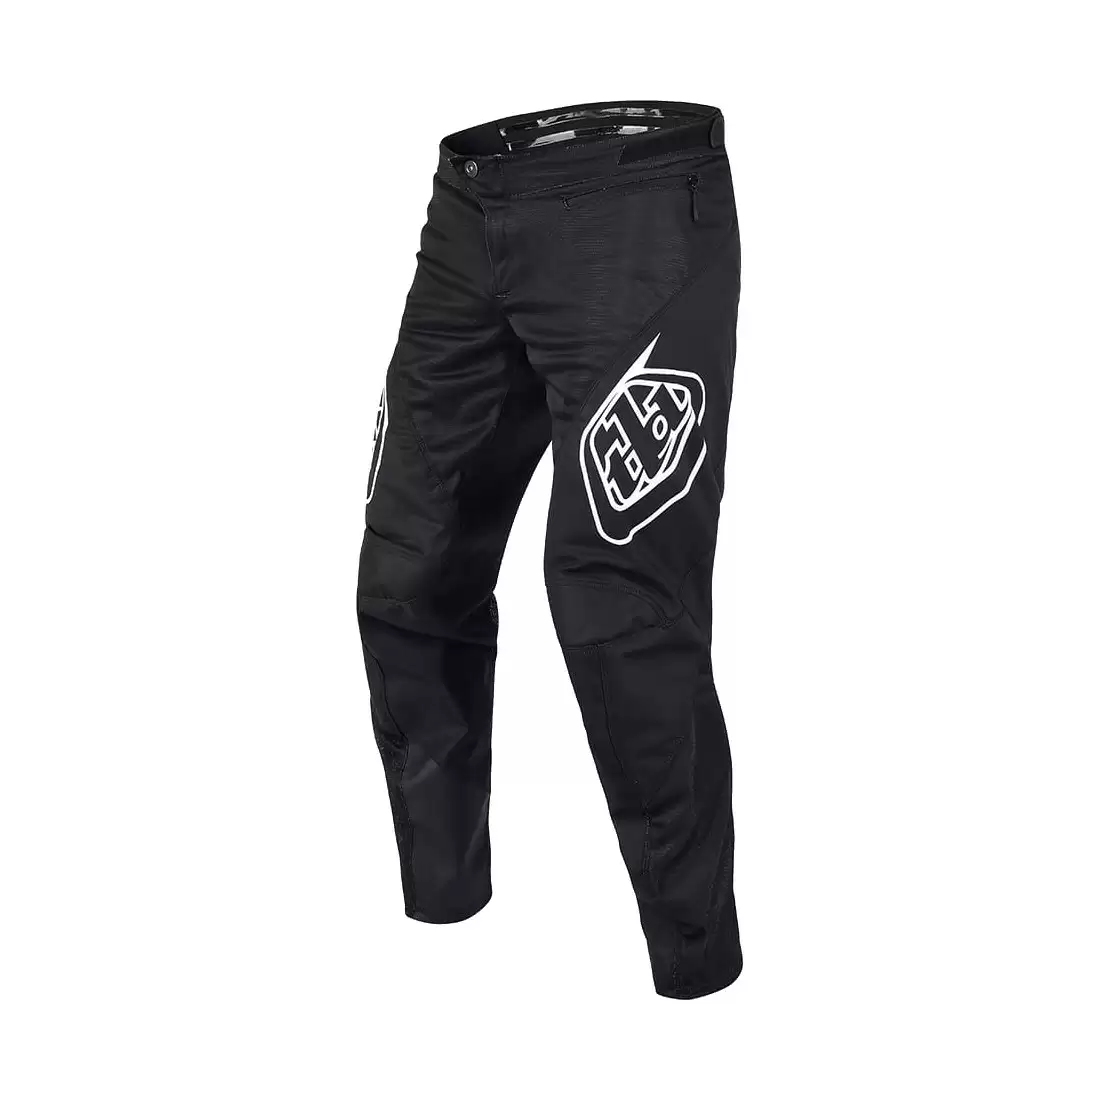 Pantalon VTT DH/Enduro Sprint Noir Taille XXXL - image